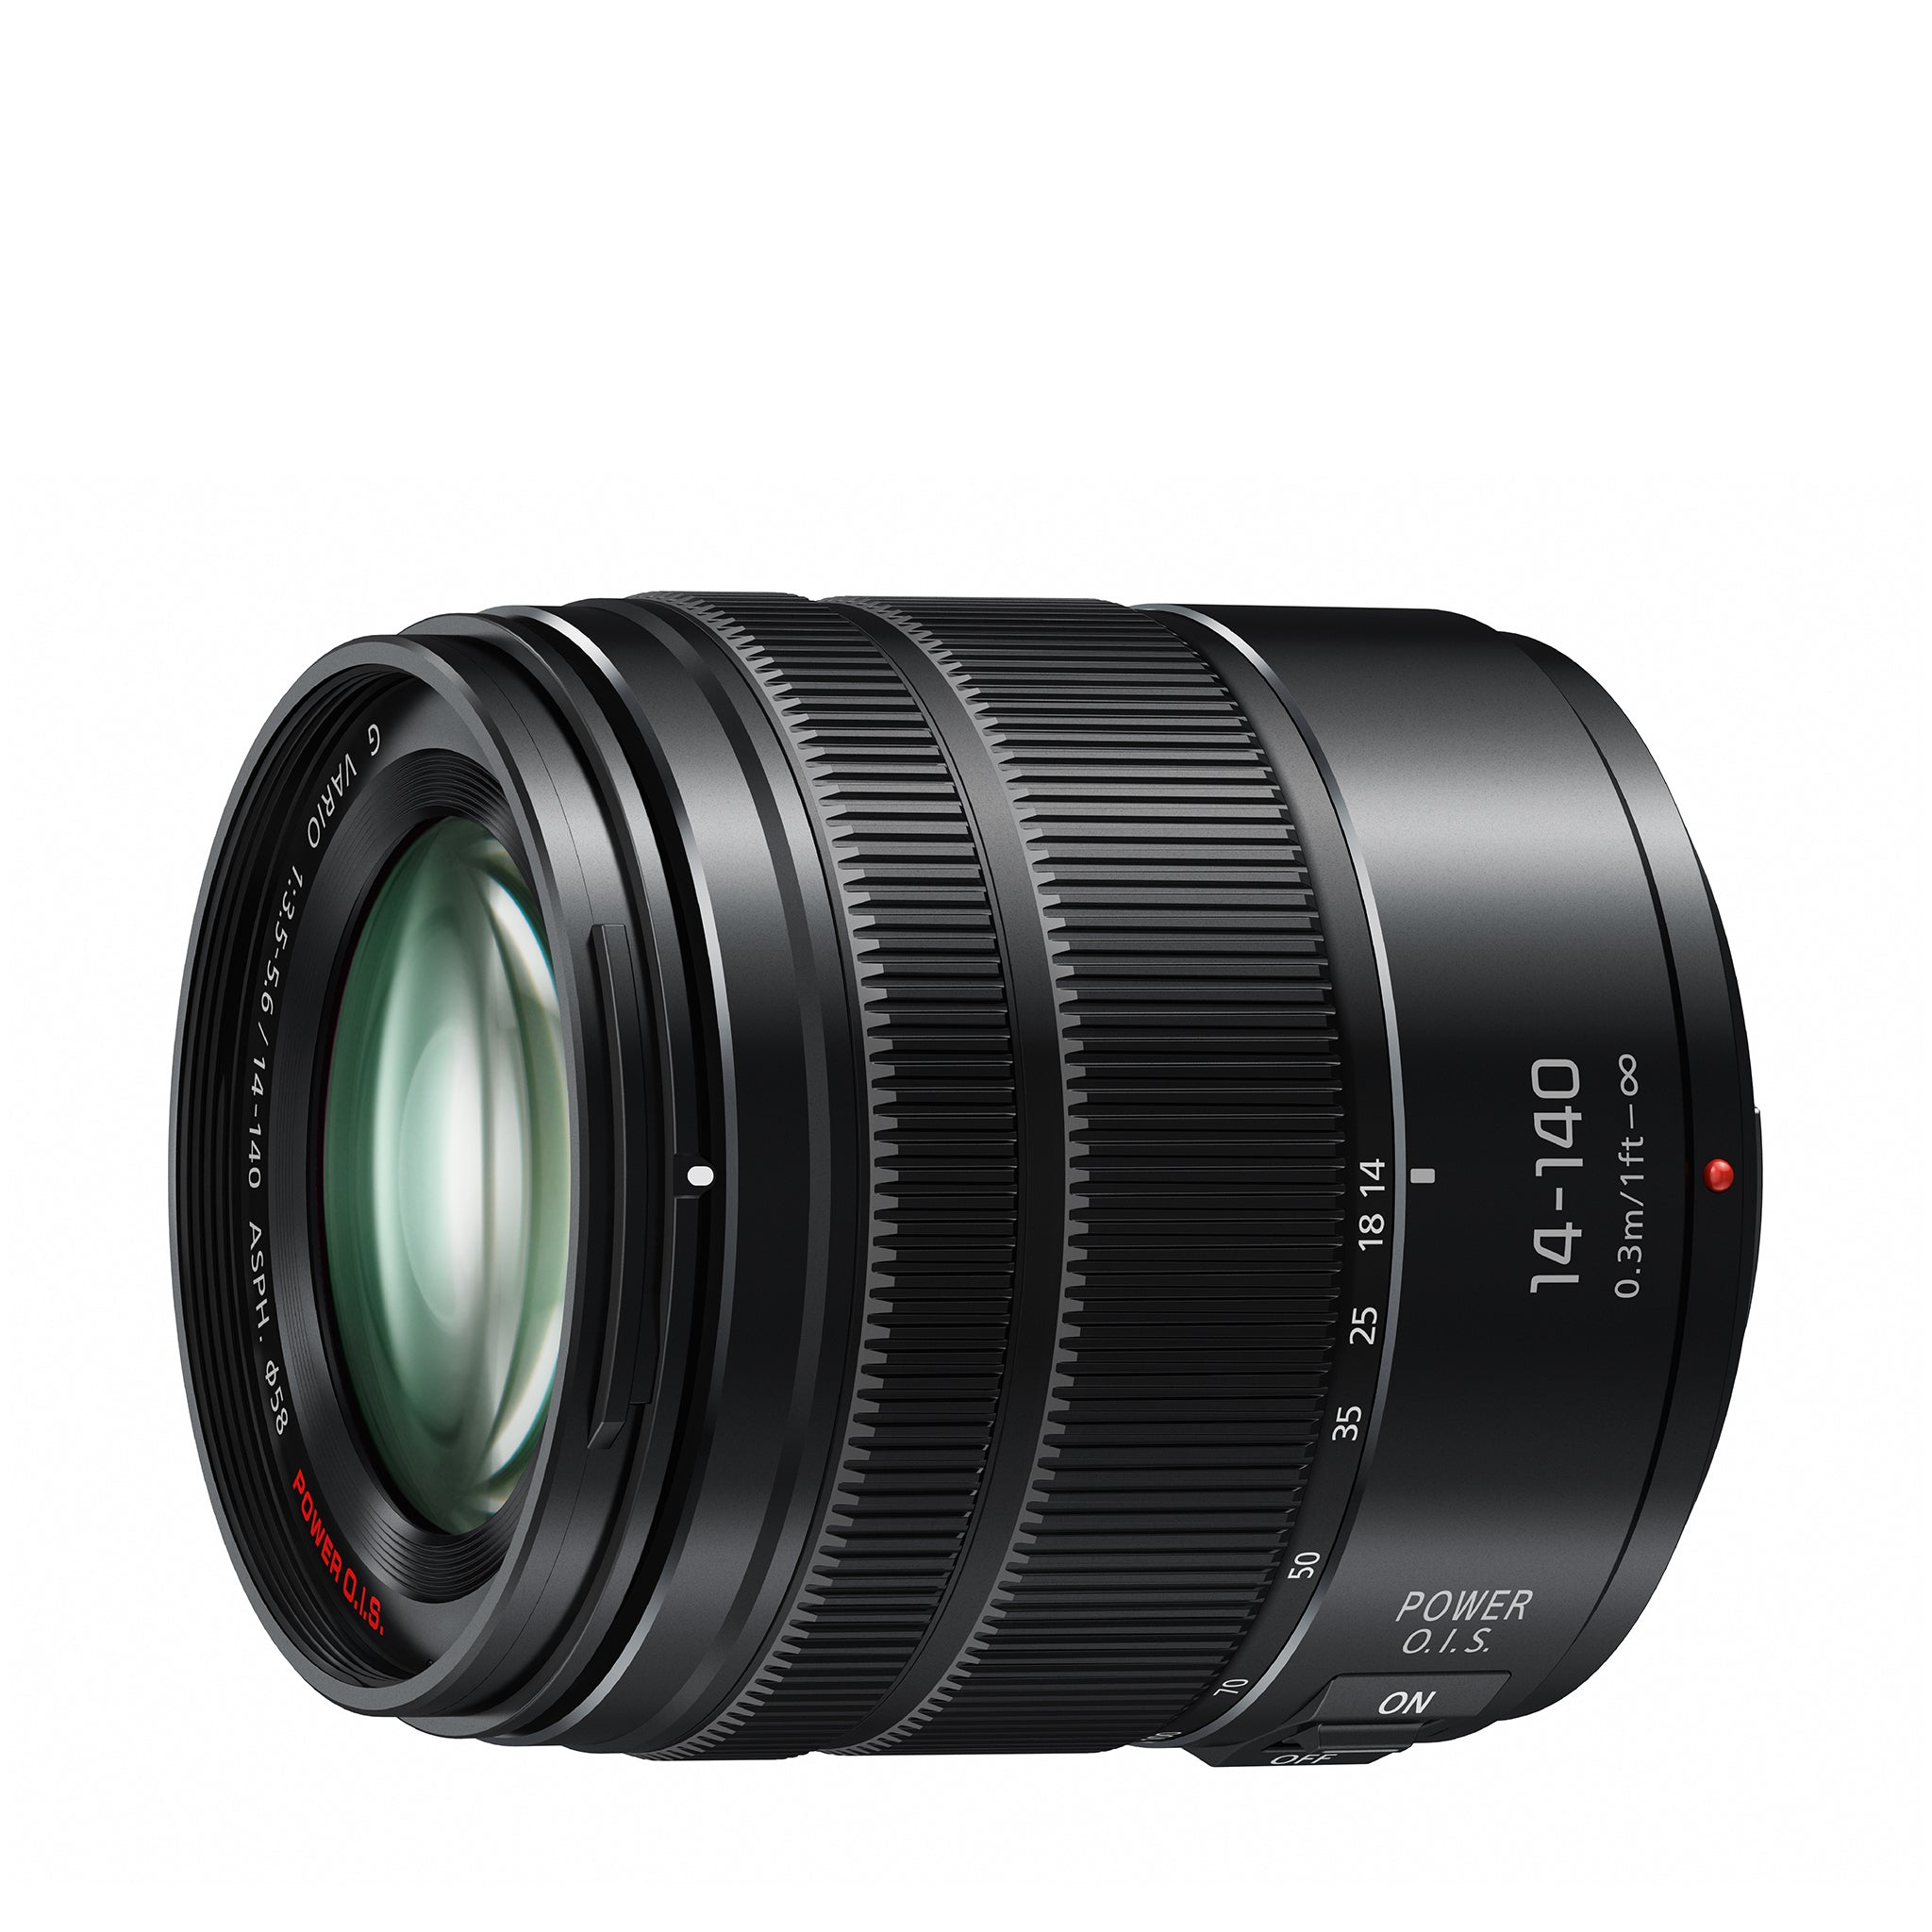 Panasonic LUMIX G Series FS14140AK 14-140mm F3.5-5.6 ASPH Lens